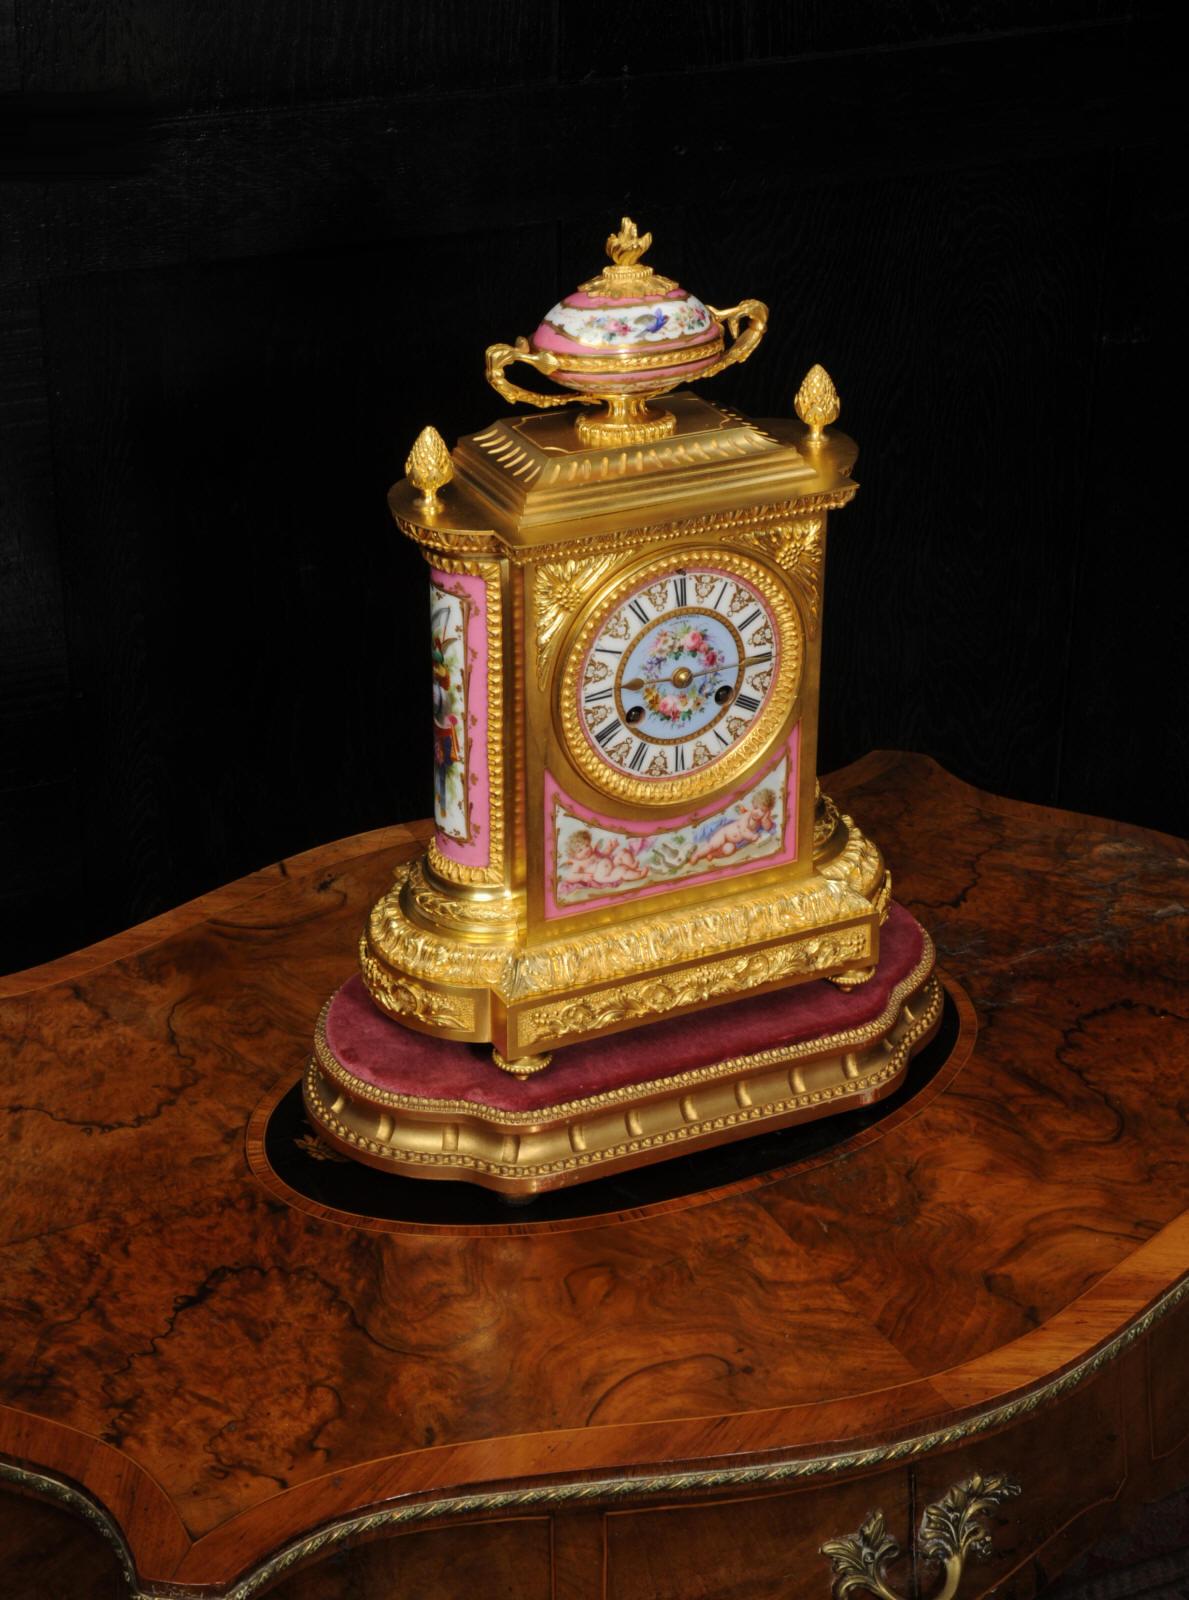 Fine Ormolu and Sevres Porcelain Clock by Jean-Baptiste Delettrez 1